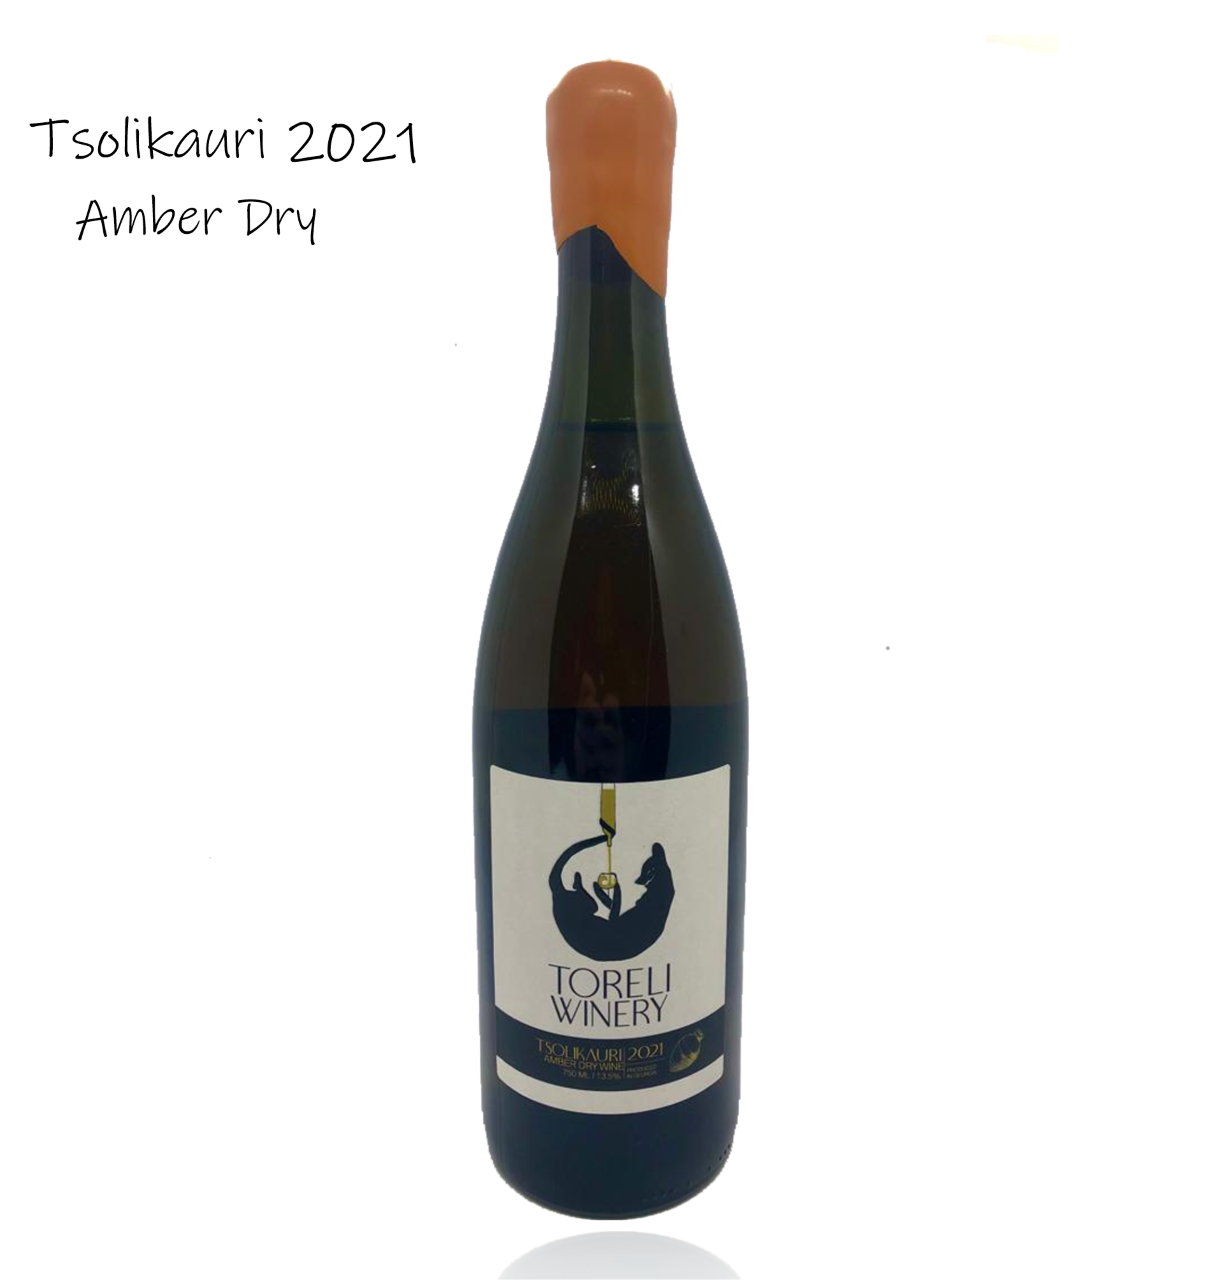 Toreli winery Tsolikauri Qvevri, Amber droge wijn 2021